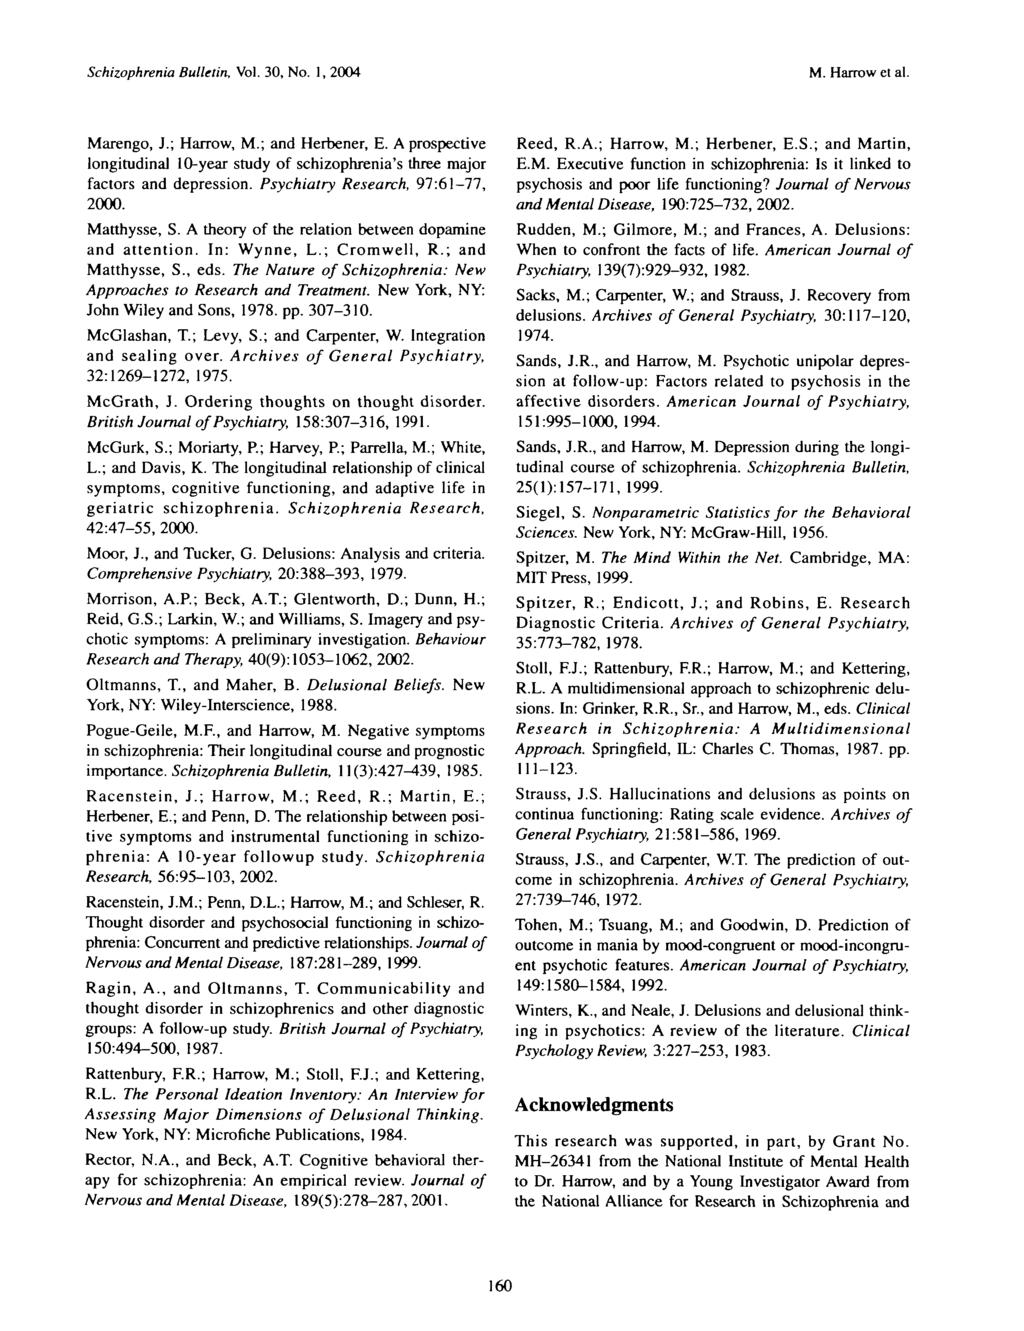 Schizophrenia Bulletin, Vol. 30, No. 1, 2004 M. Harrow et al. Marengo, J.; Harrow, M.; and Herbener, E. A prospective longitudinal 10-year study of schizophrenia's three major factors and depression.